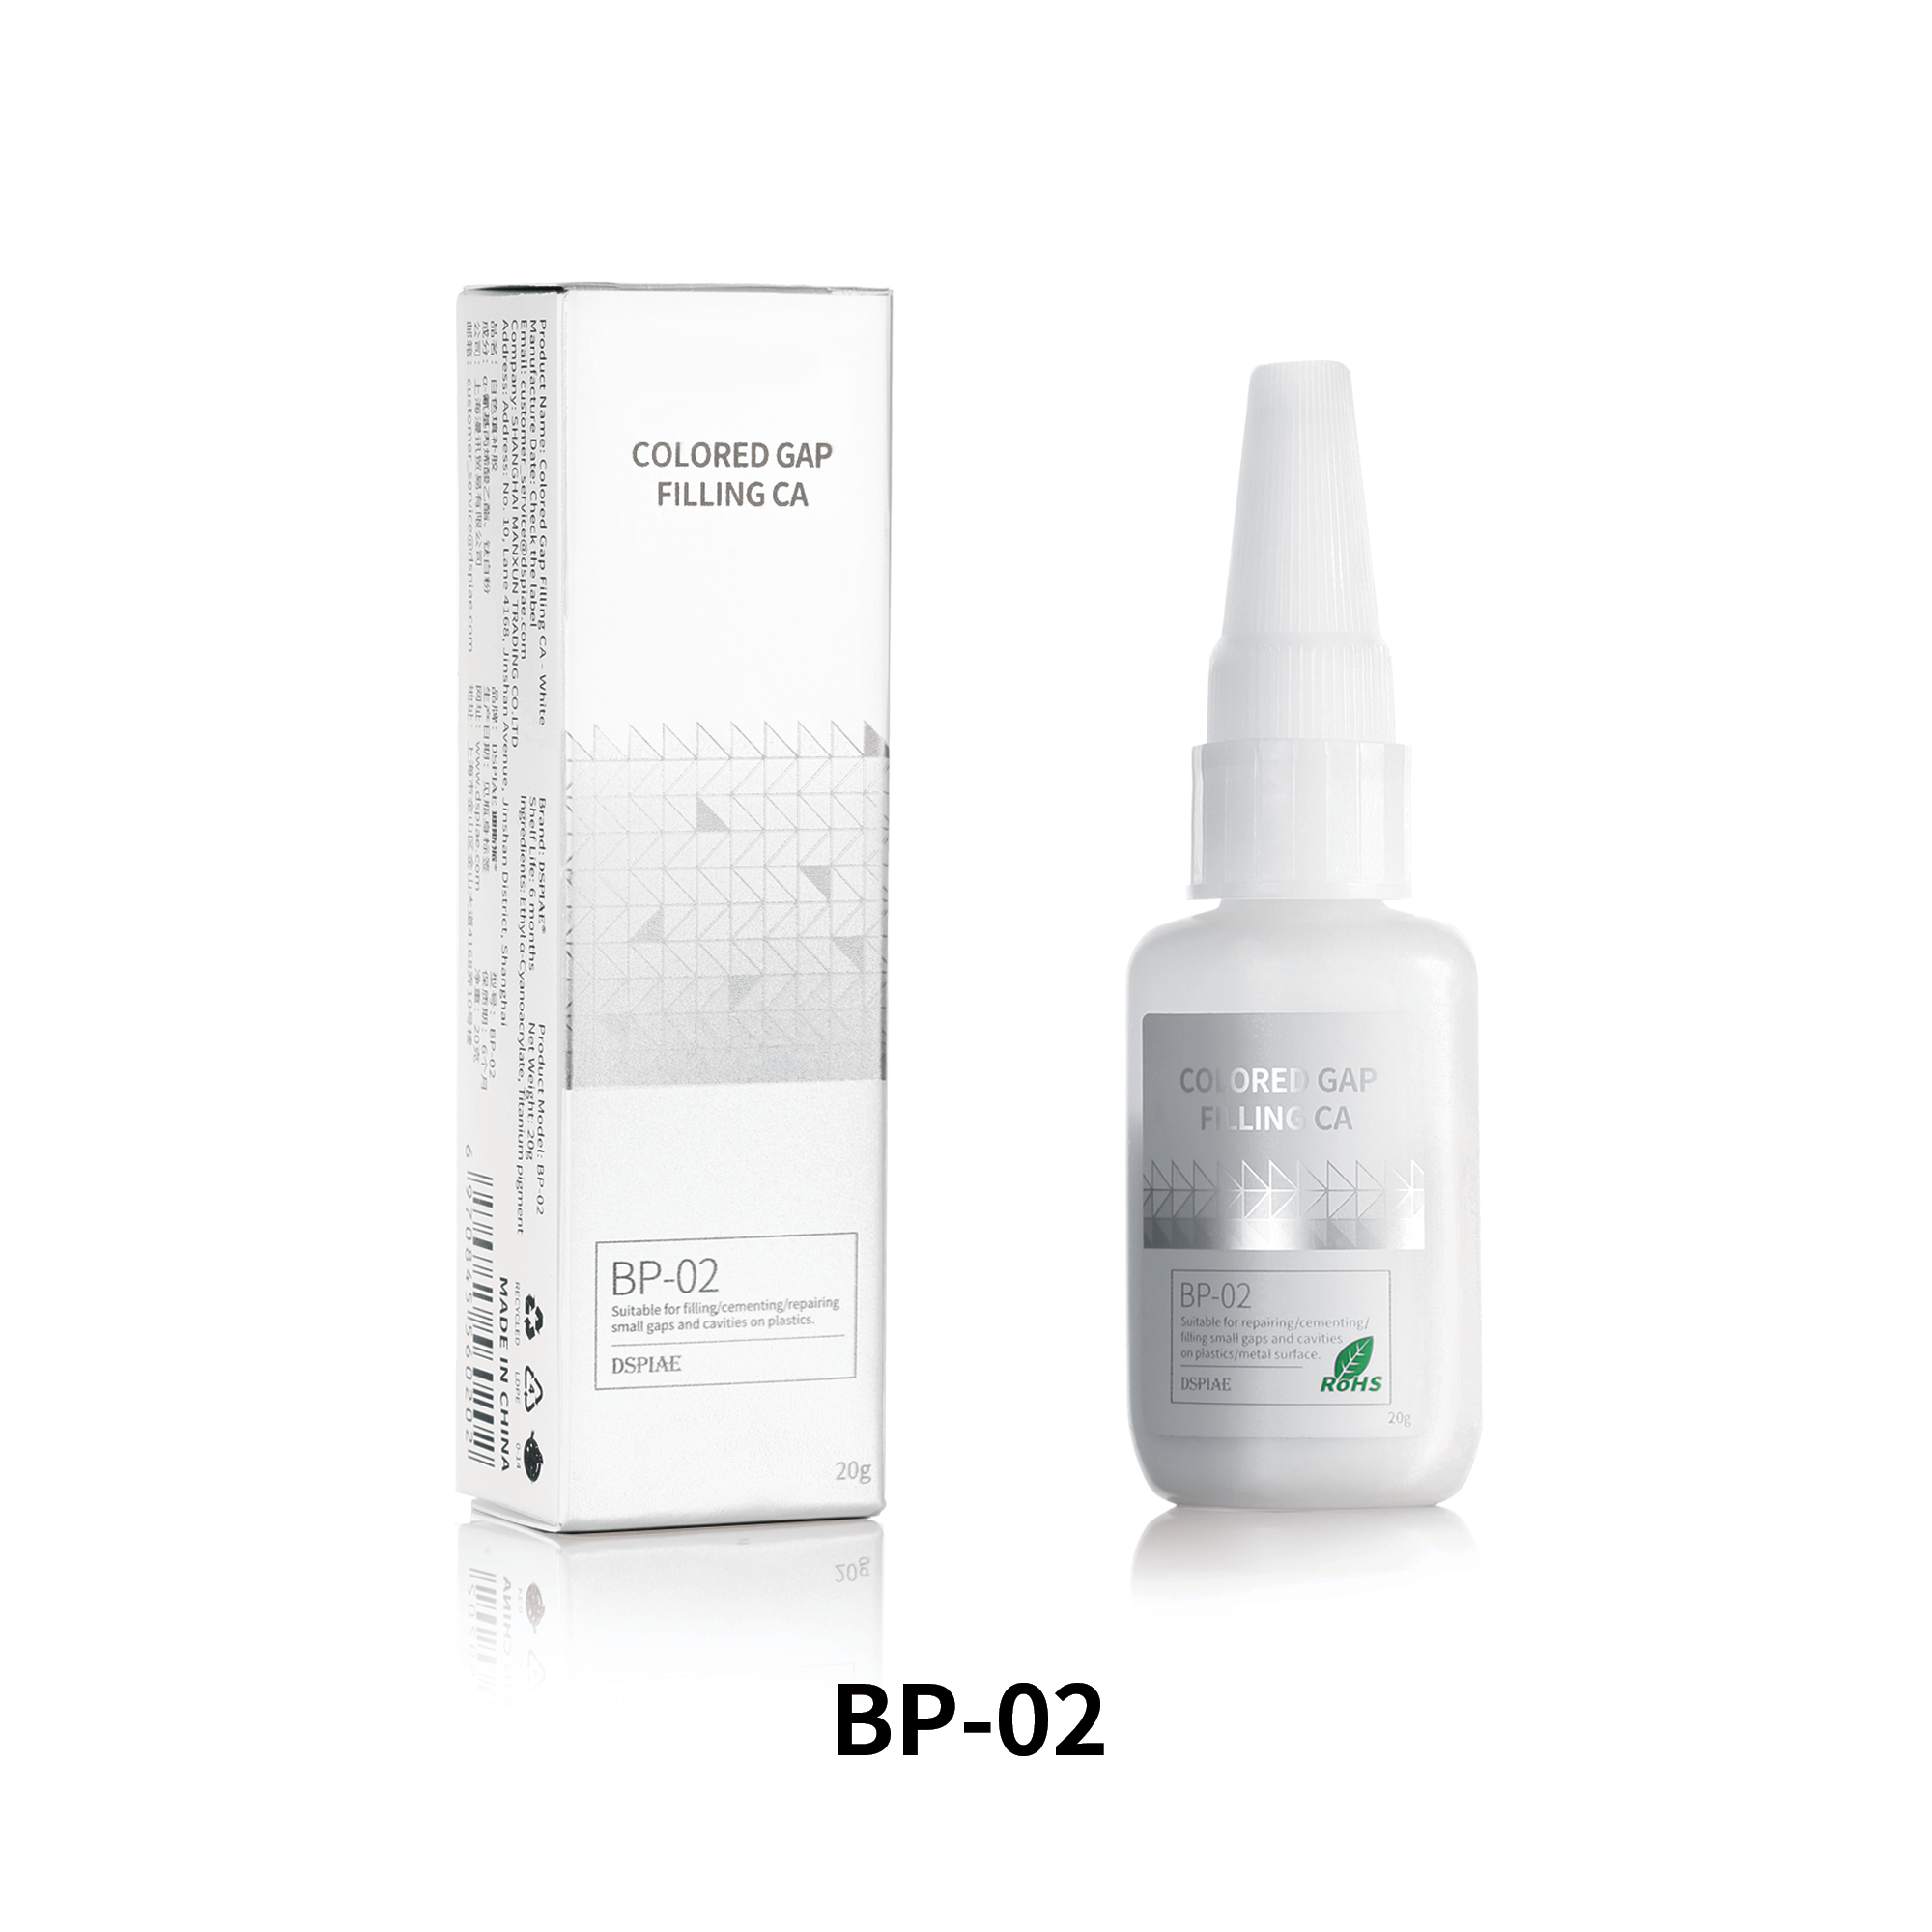 BP-02 DSPIAE White liquid putty, 20 gr.